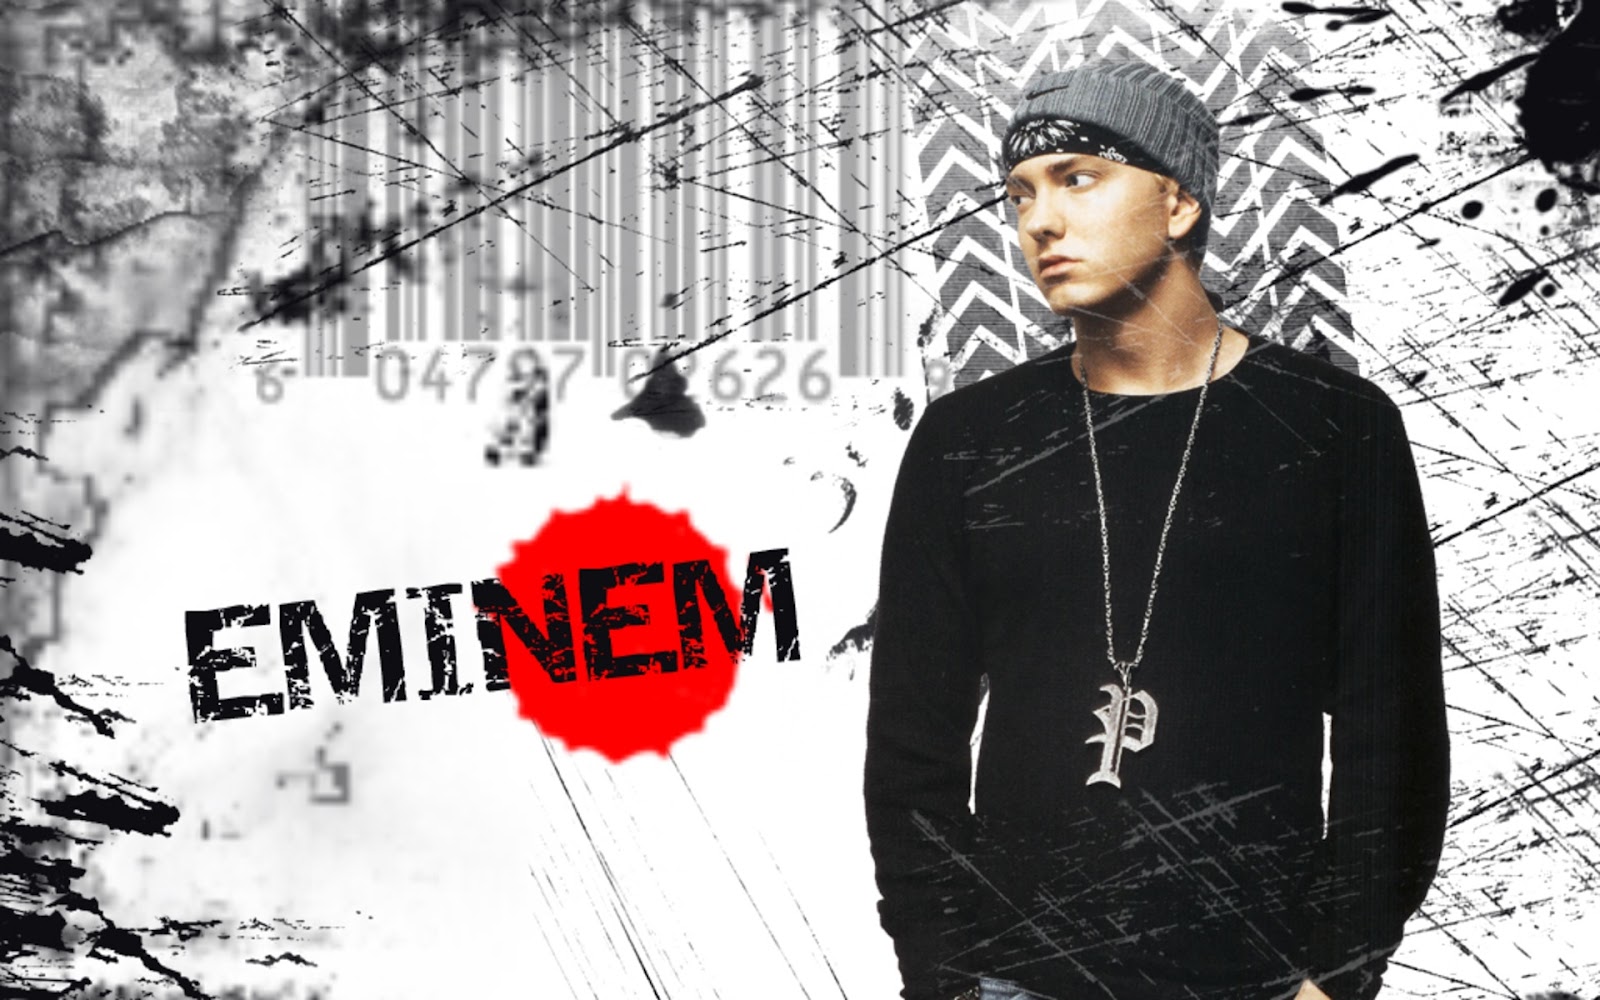 http://2.bp.blogspot.com/-v_08IyVSRjk/UE2aHQPj2fI/AAAAAAAABYk/Al43L3zPH_A/s1600/Eminem+HD+Wallpaper+2012-2013+04.jpg